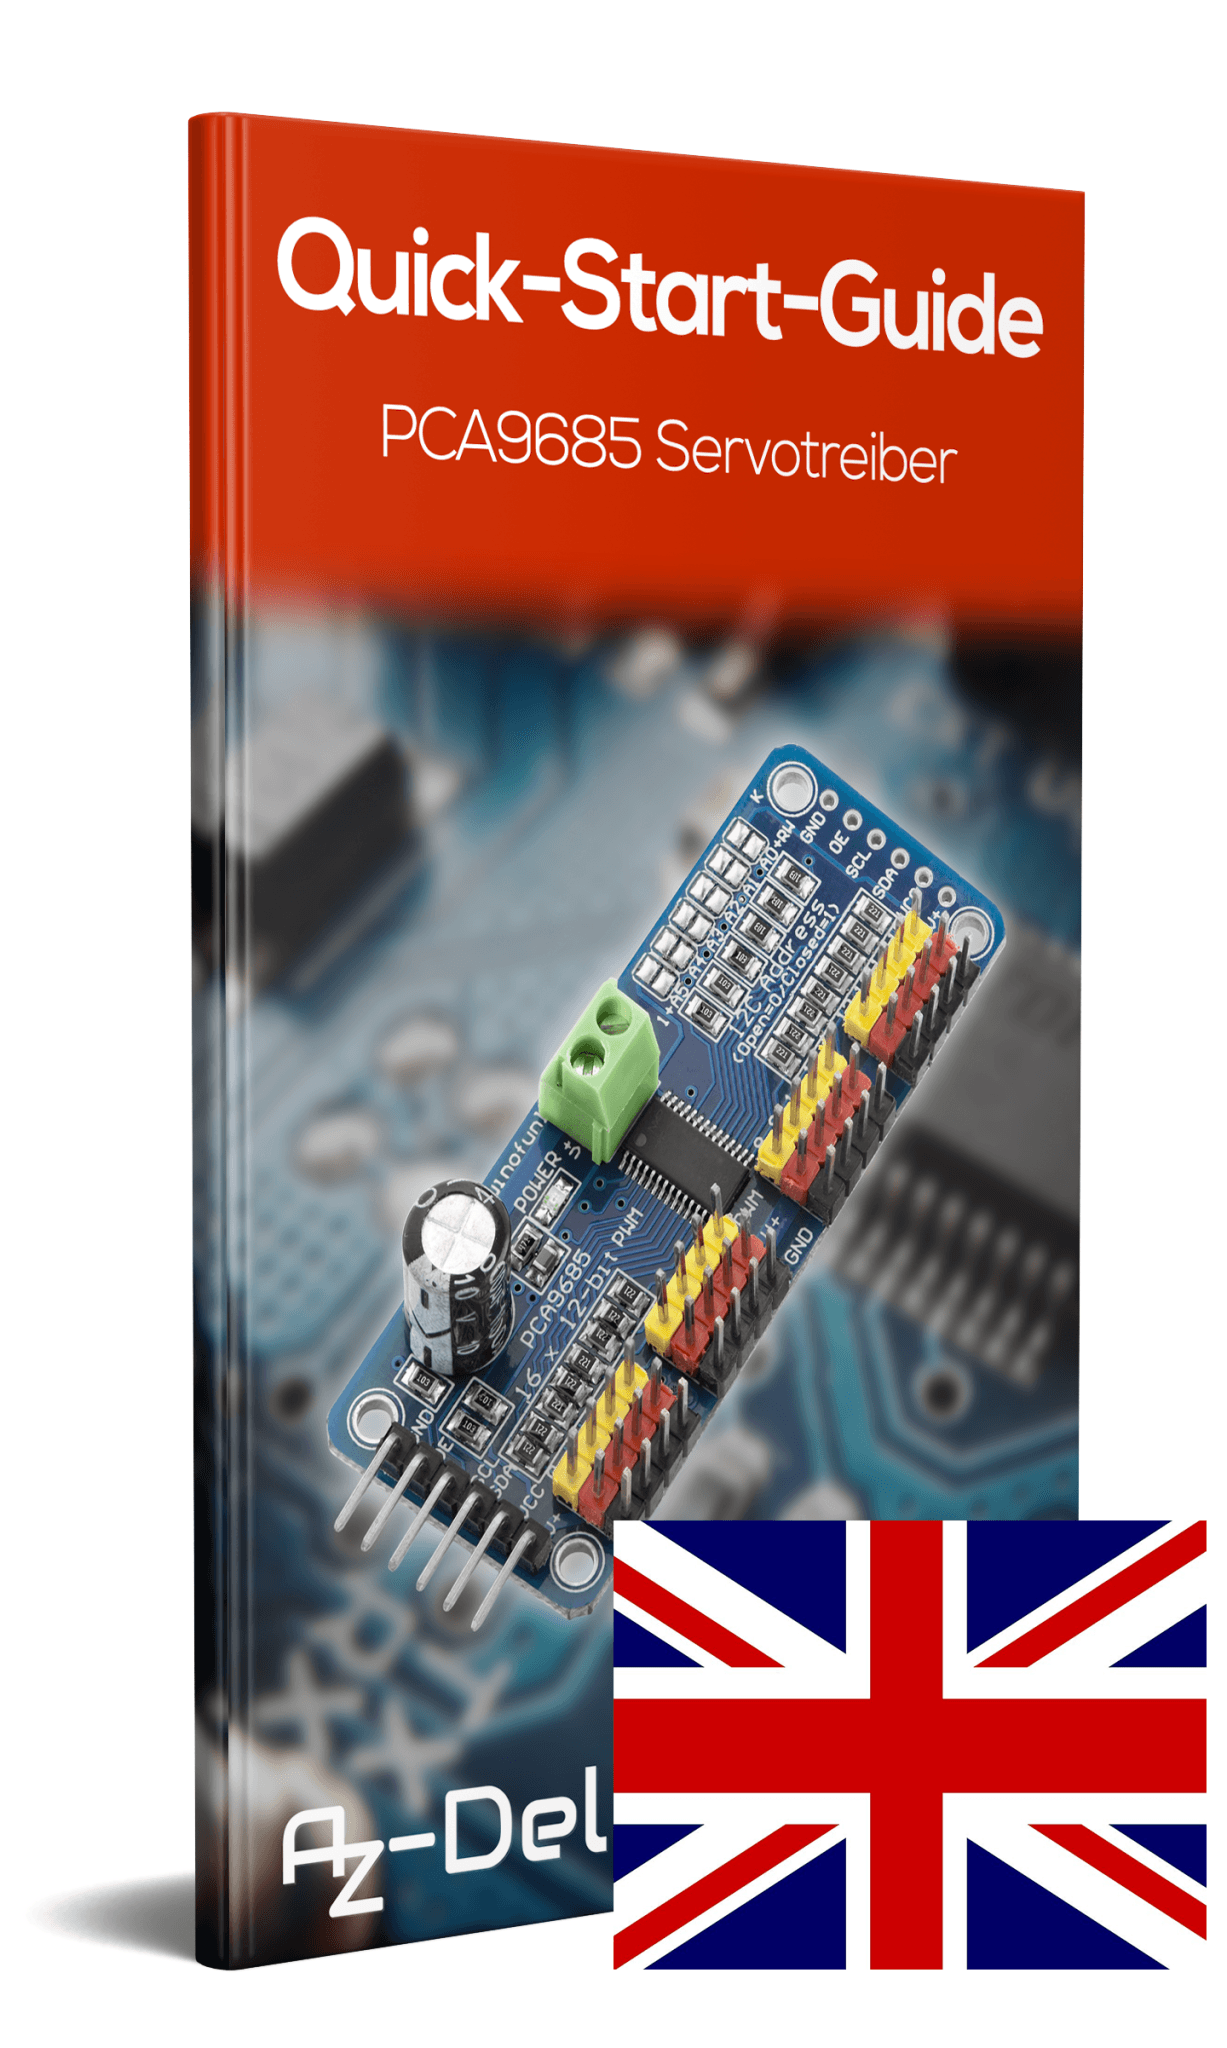 PCA9685 16 Kanal 12 Bit PWM Servotreiber für Raspberry Pi - AZ-Delivery